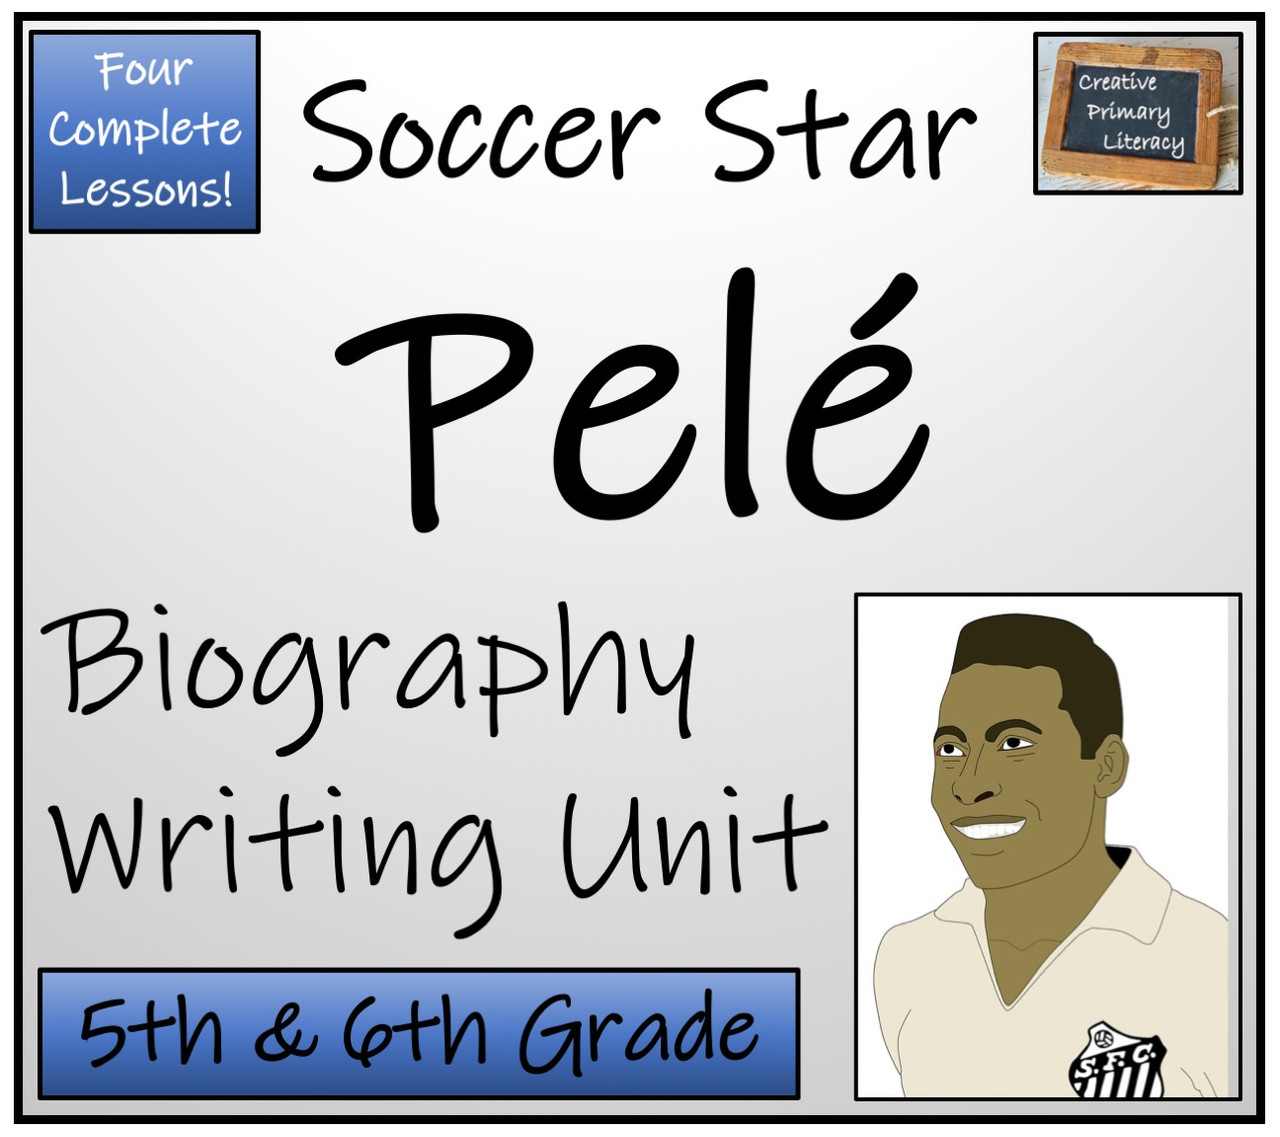 Pelé - 5th & 6th Grade Biography Writing Activity